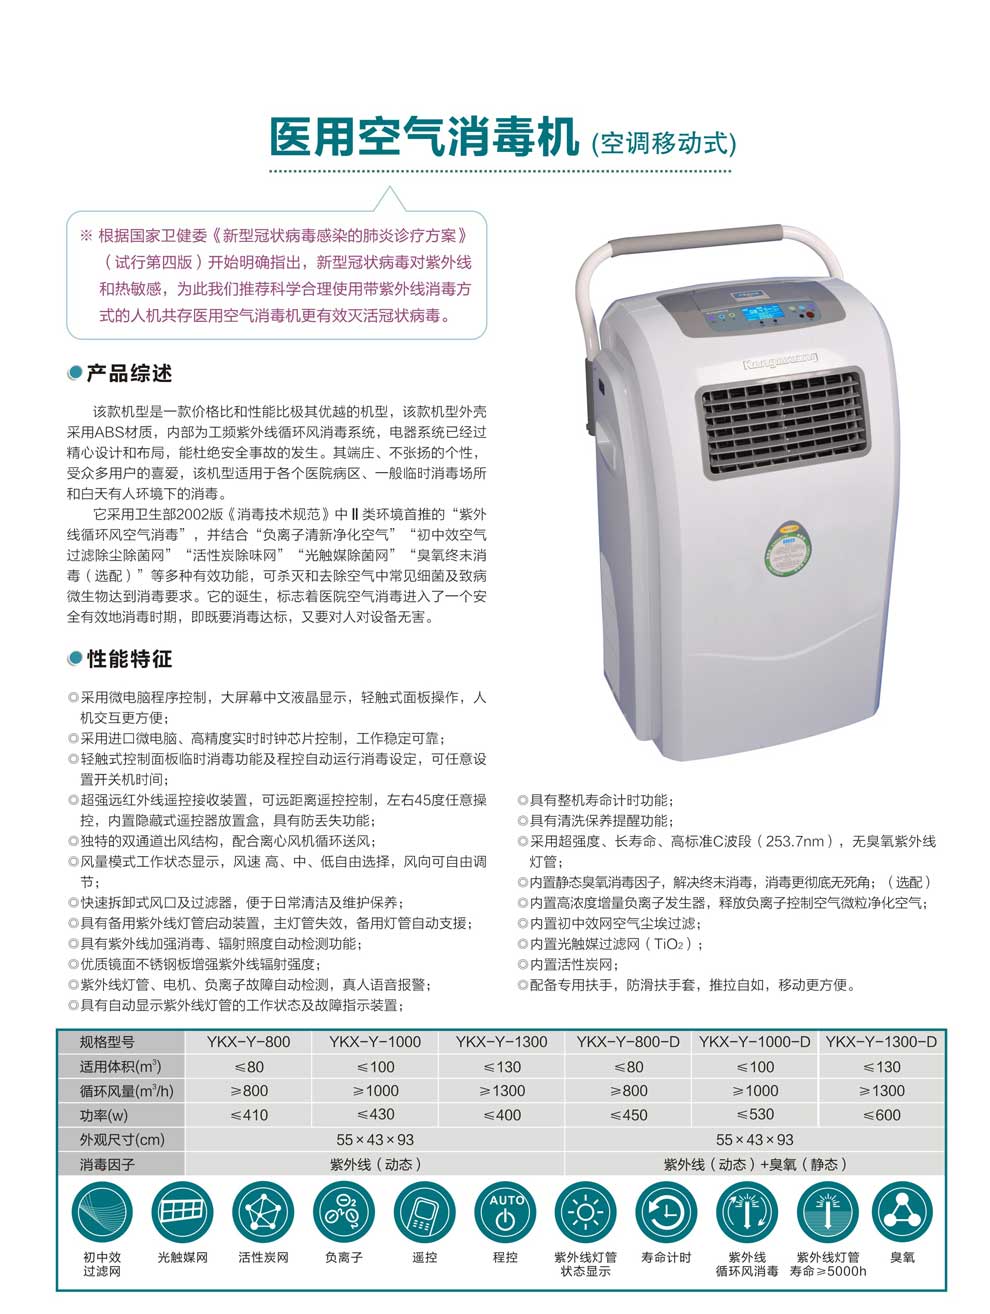 YKX-Y系空调移动式消毒机--彩页.jpg